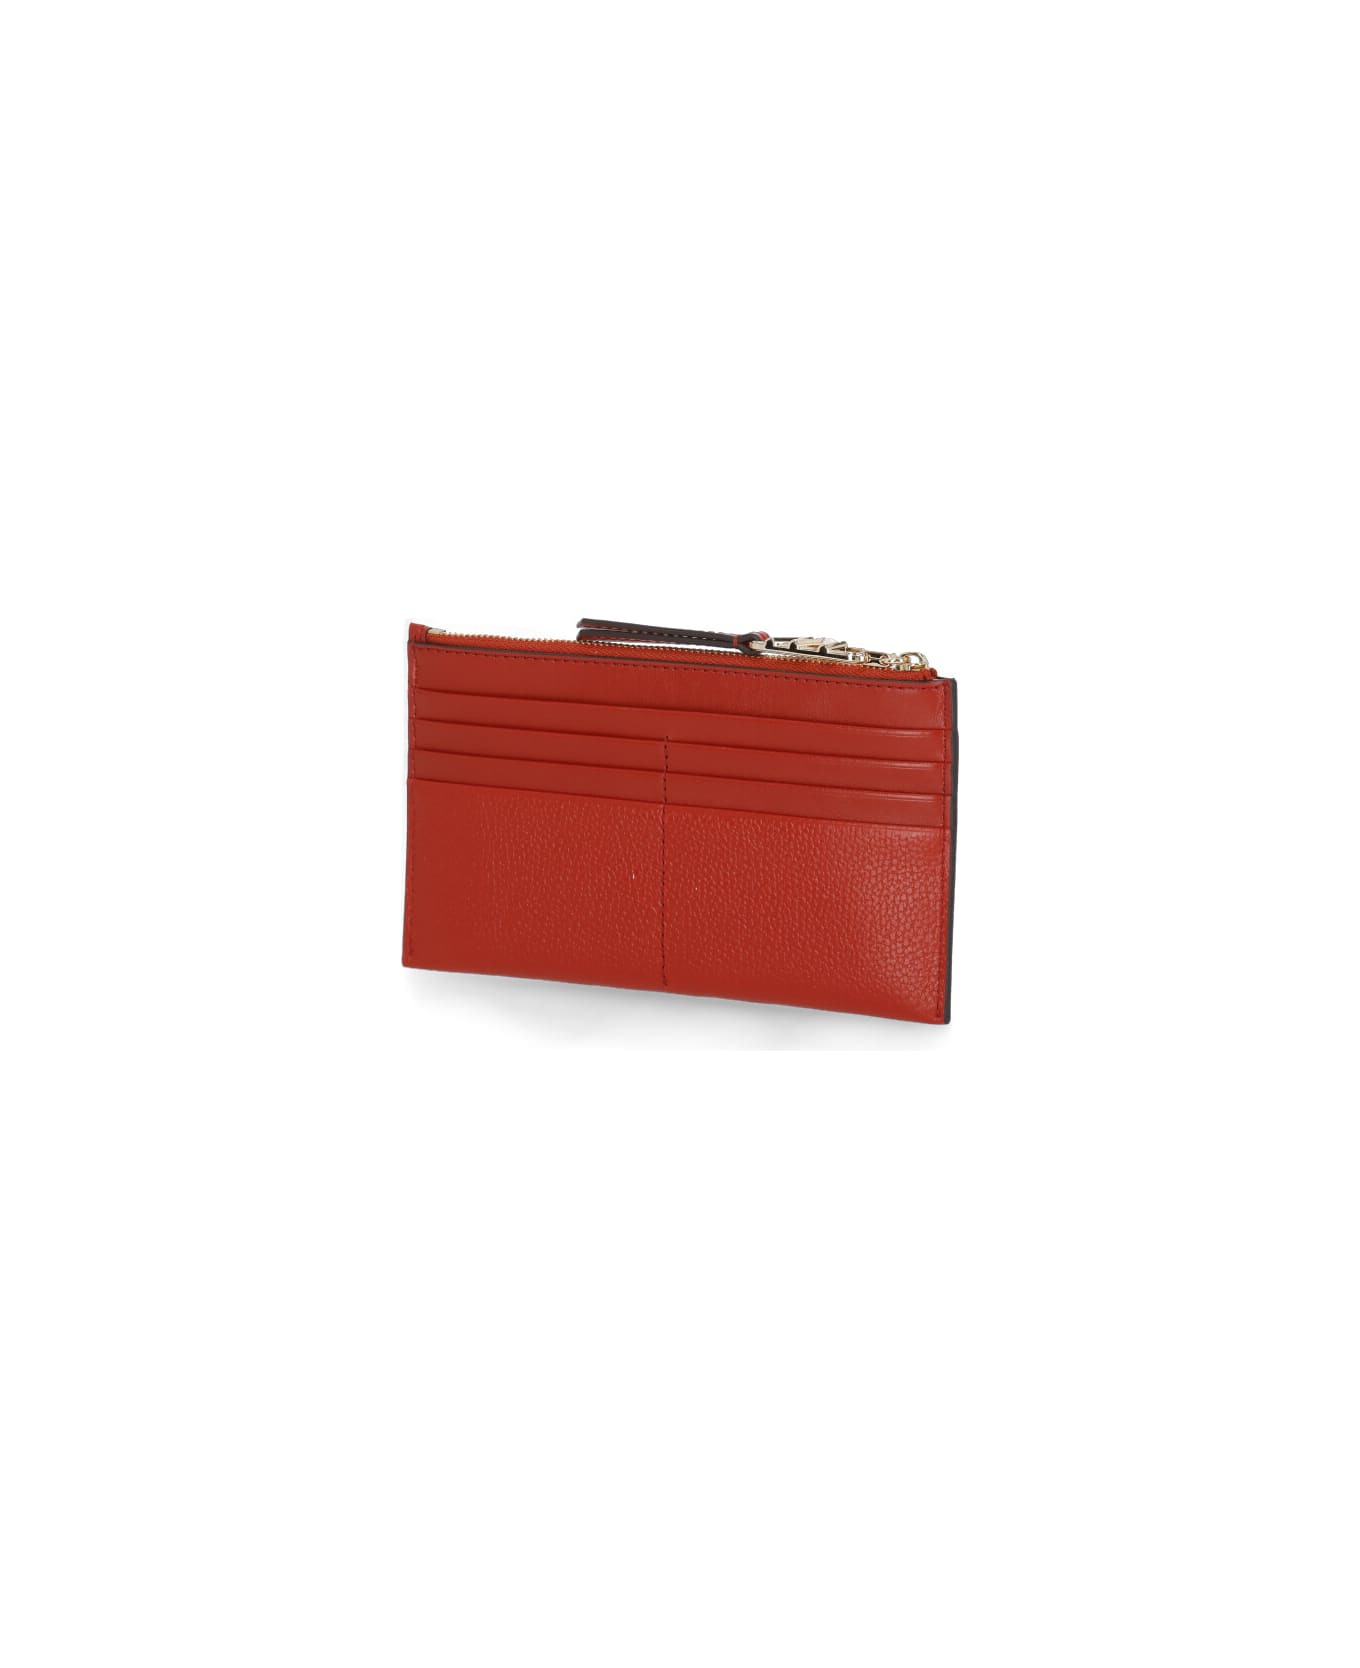 Michael Kors Logo Plaque Zipped Wallet - Red 財布